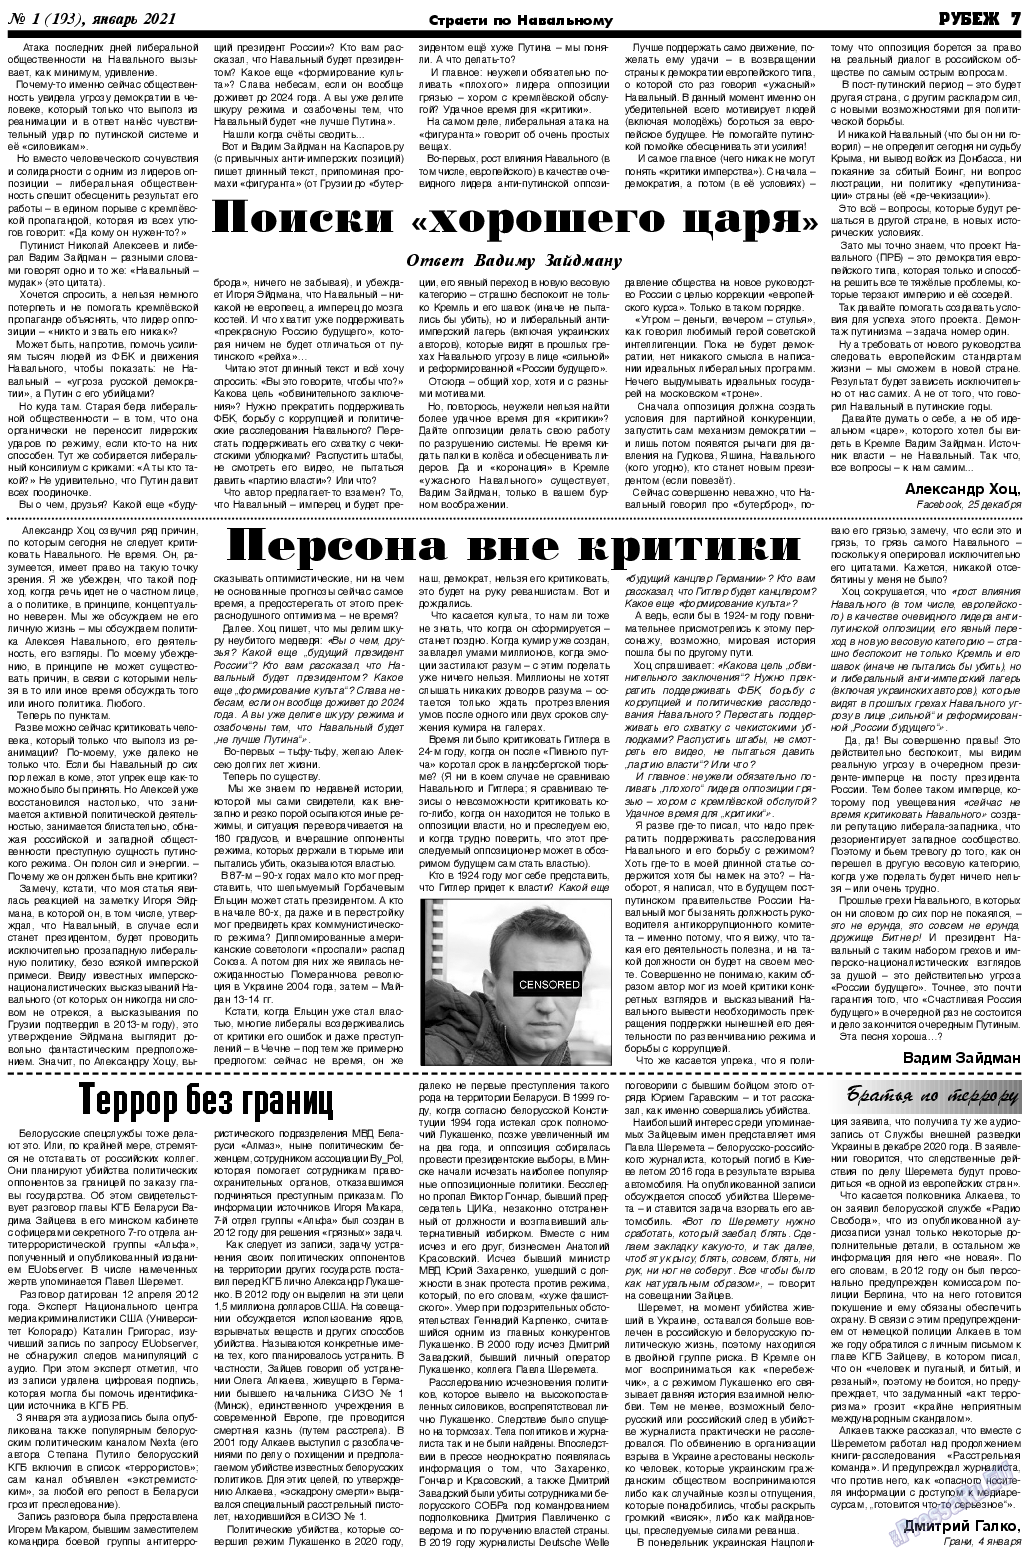 Рубеж, газета. 2021 №1 стр.7